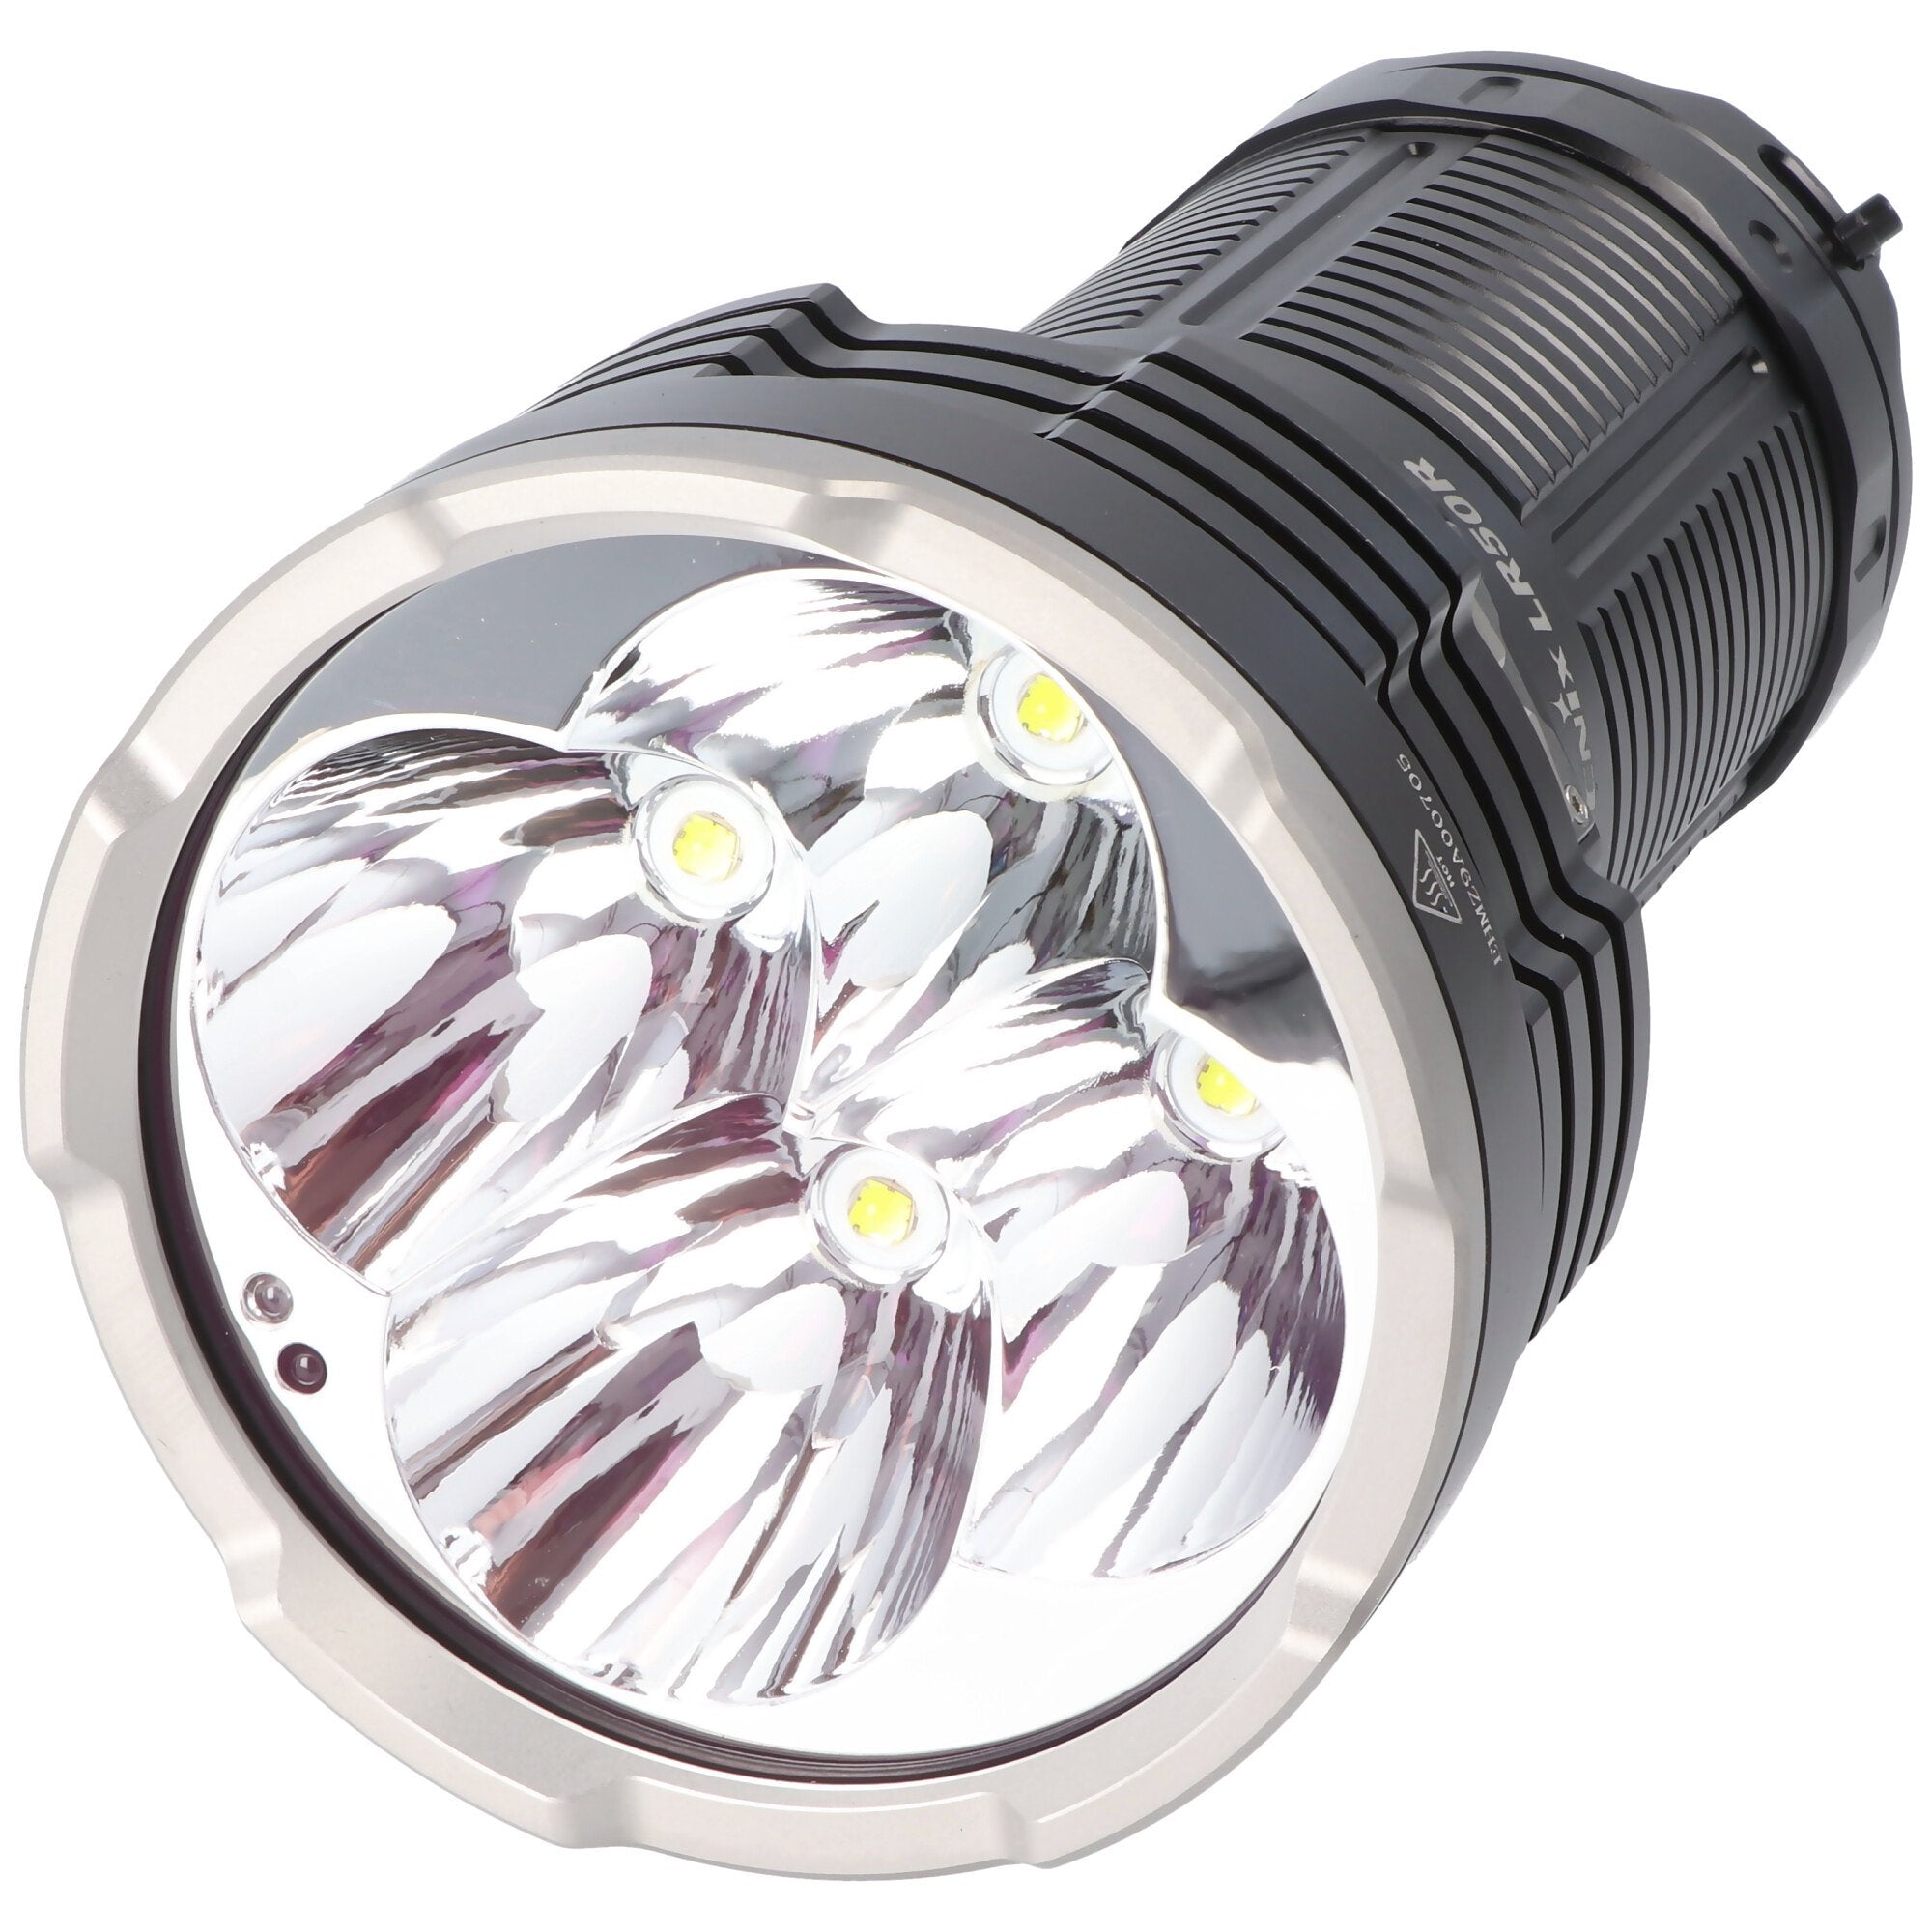 Fenix LR50R LED torch TK75, 12000 lumens, 950 meters range, USB-C charging port, power bank function